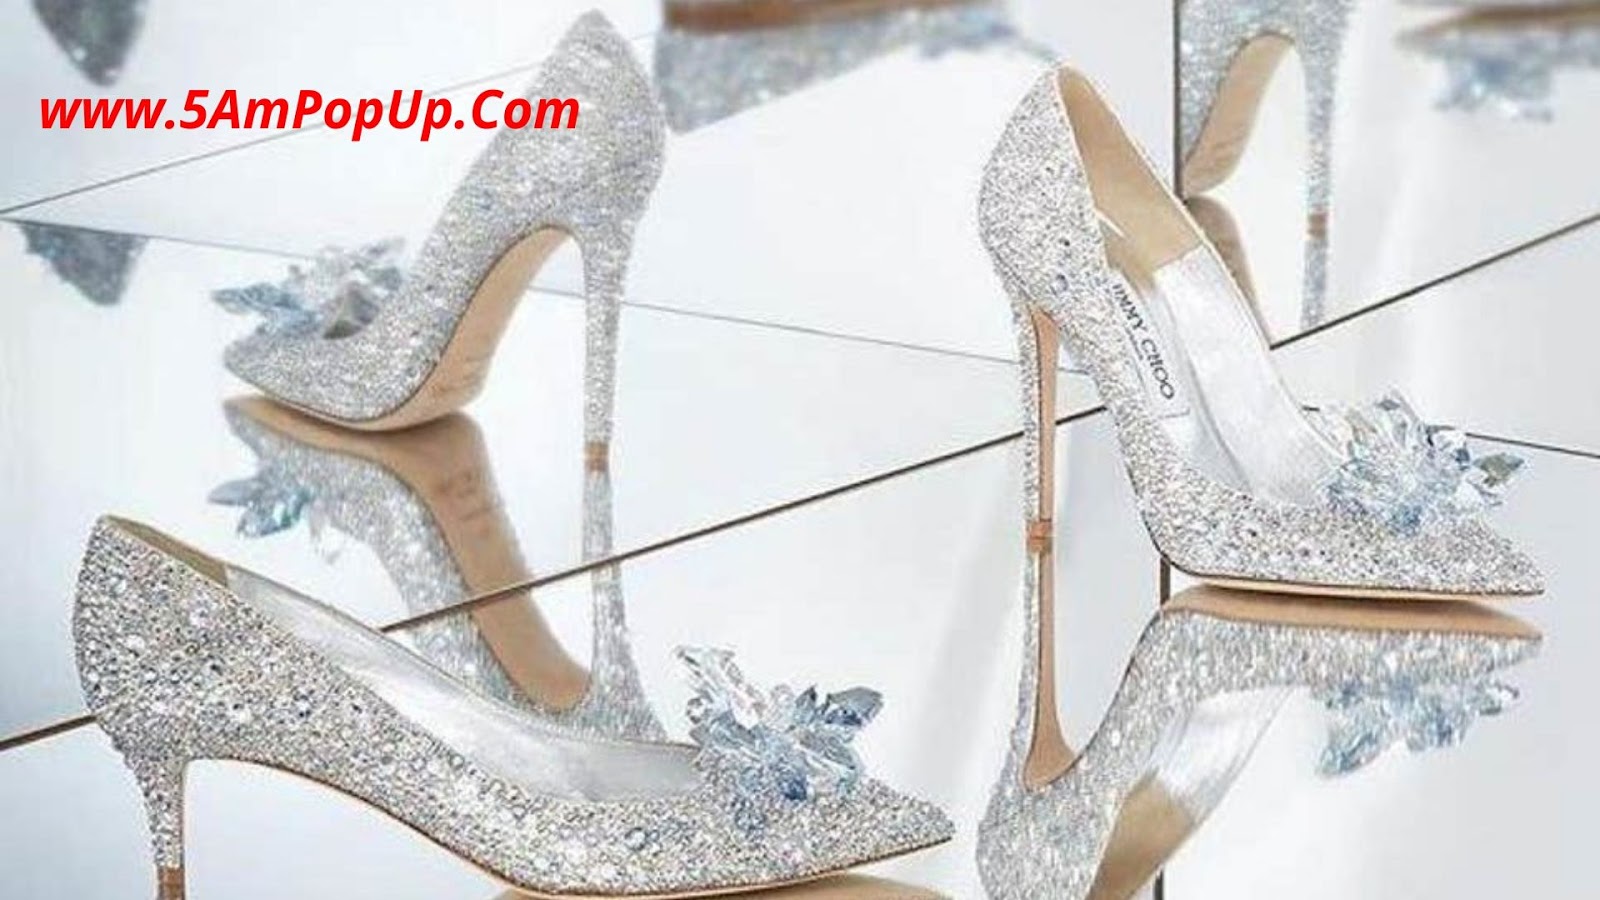 Red Zardosi Heels | Bridal sandals heels, Bridal sandals, Wedding shoes  bride